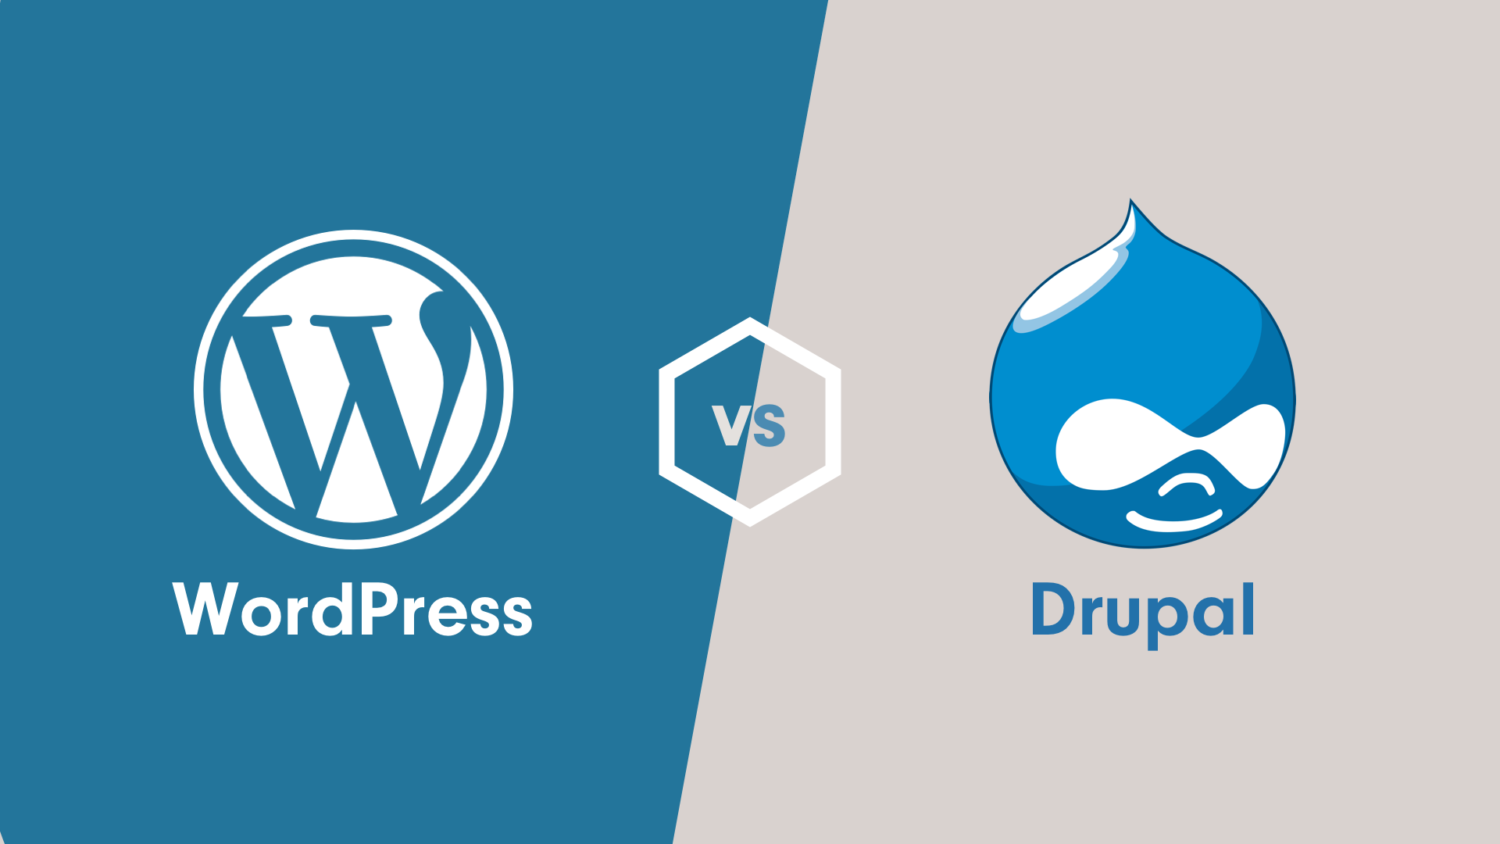 drupal vs wordpress